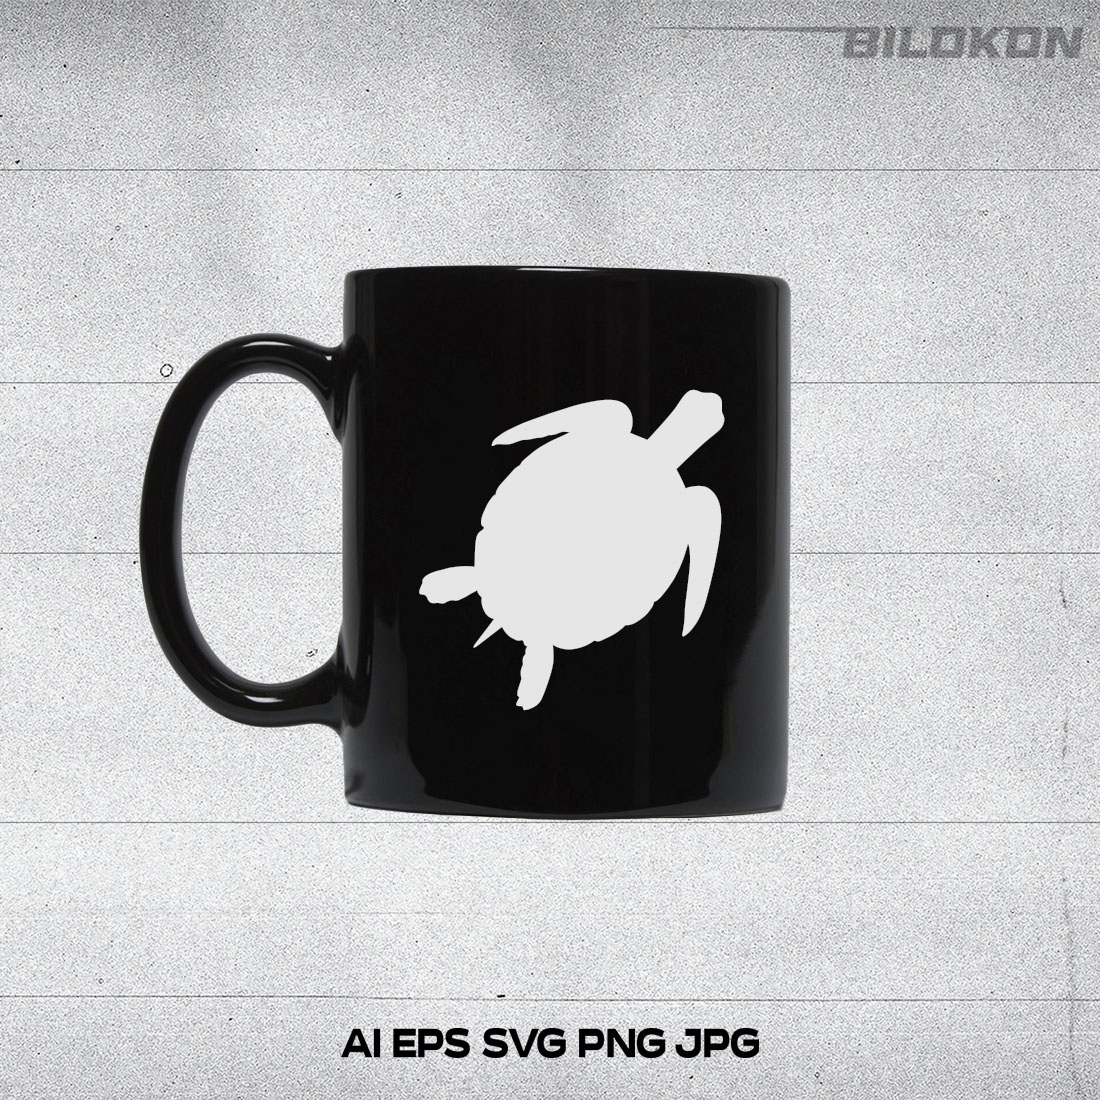 Black coffee mug with a turtle on it.